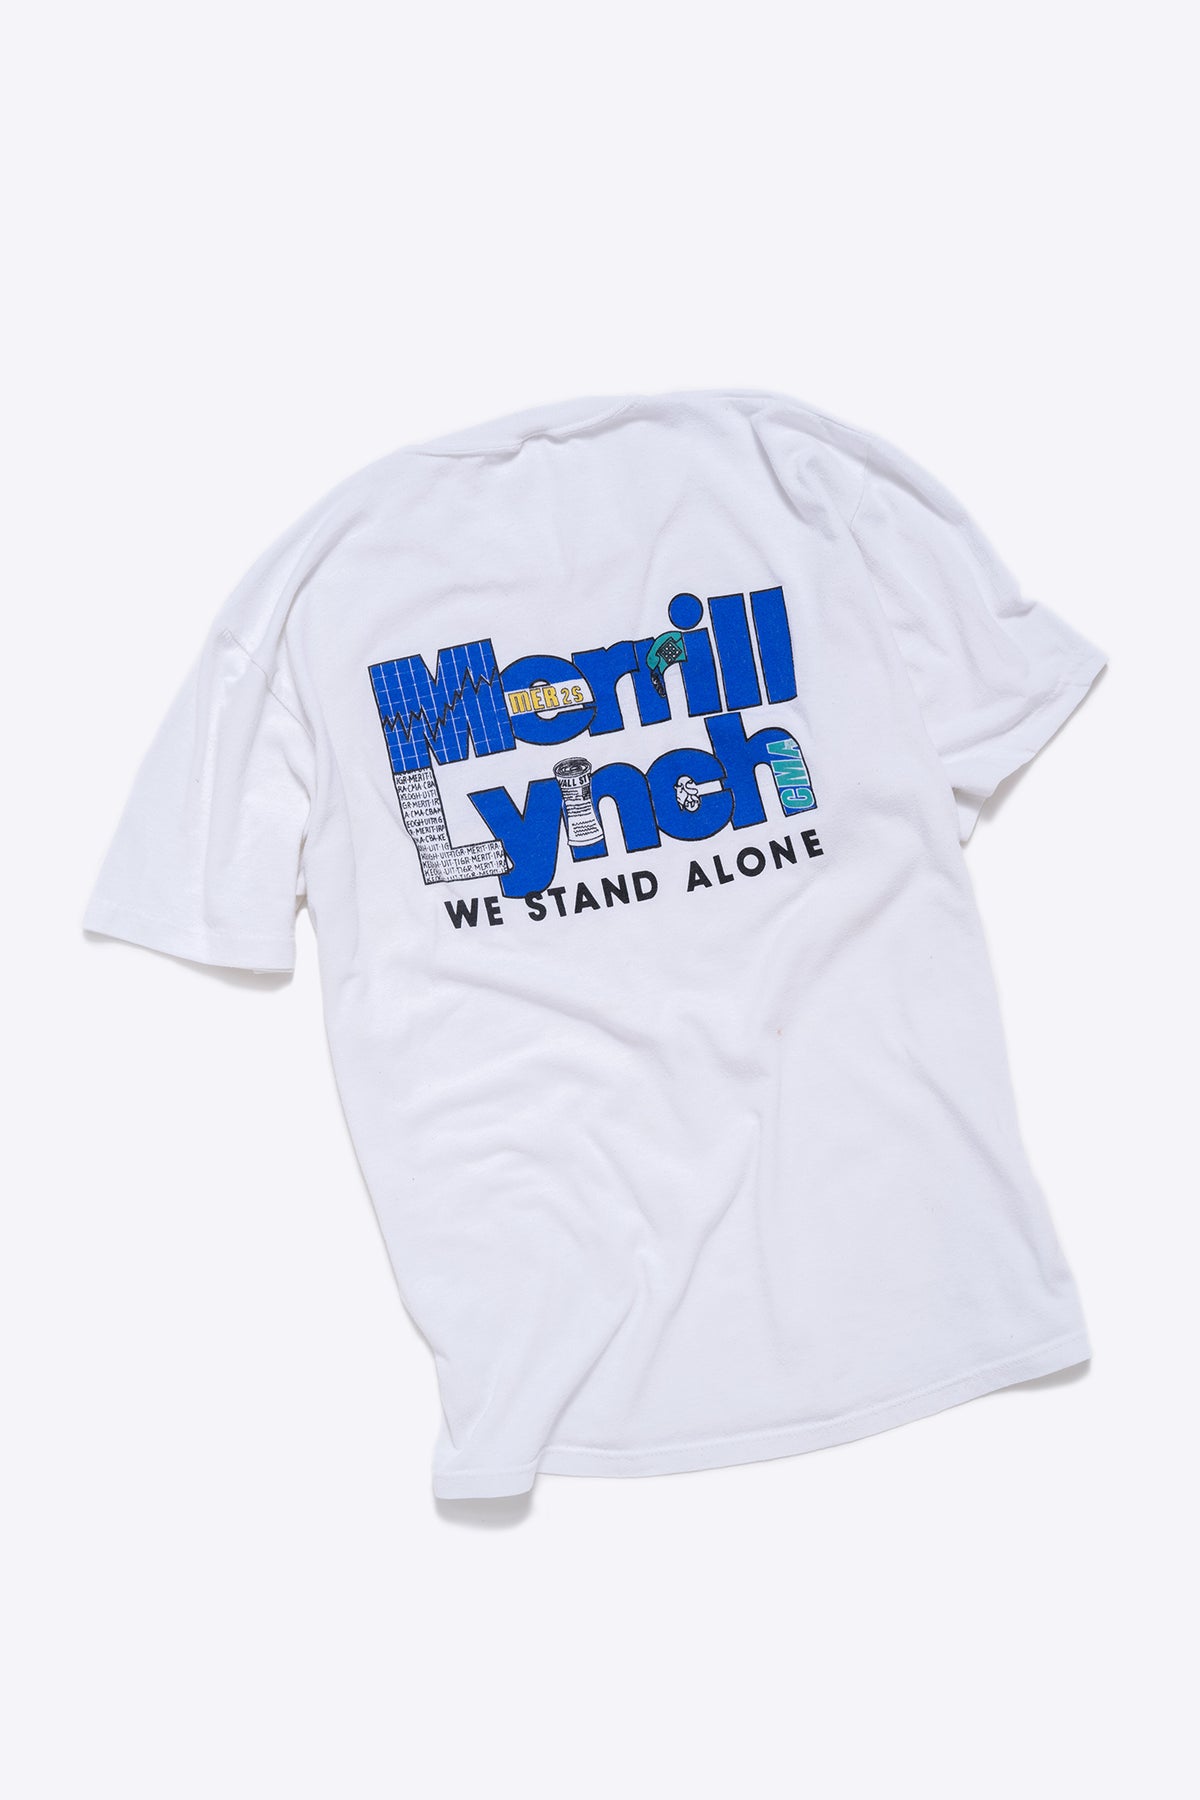 Merrill Lynch Vintage T-Shirt